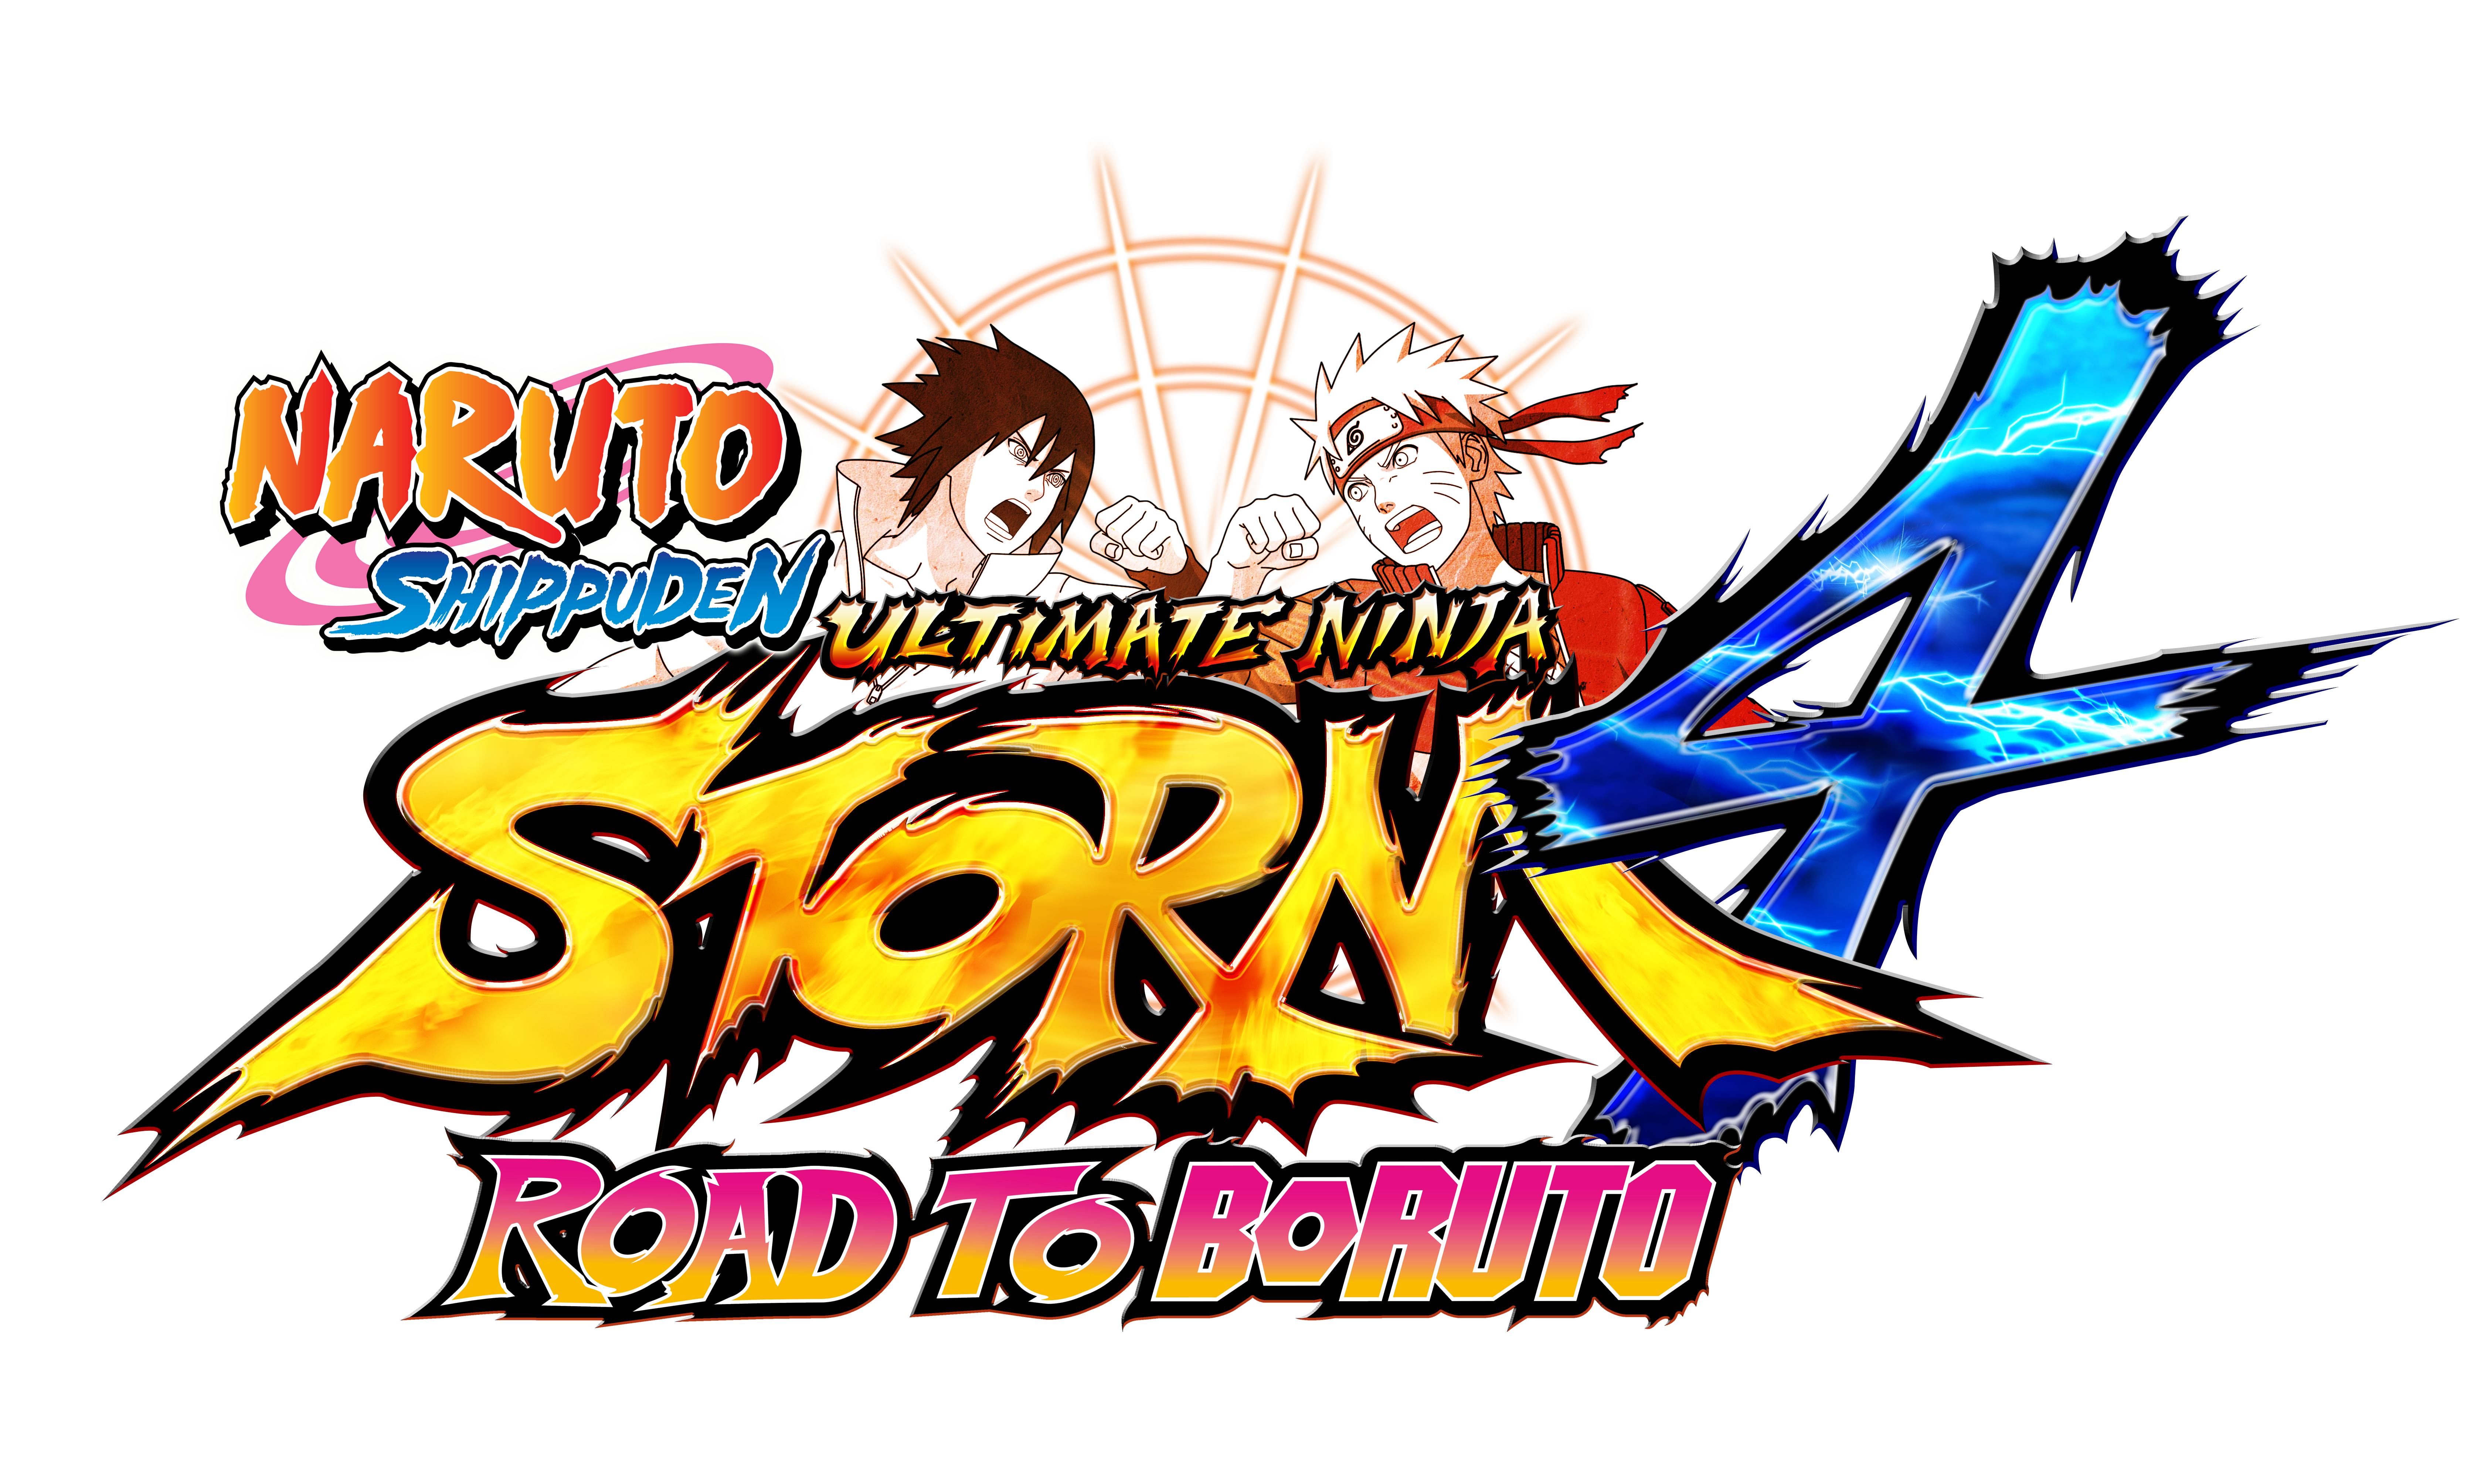 naruto ultimate ninja storm 4 road to boruto features